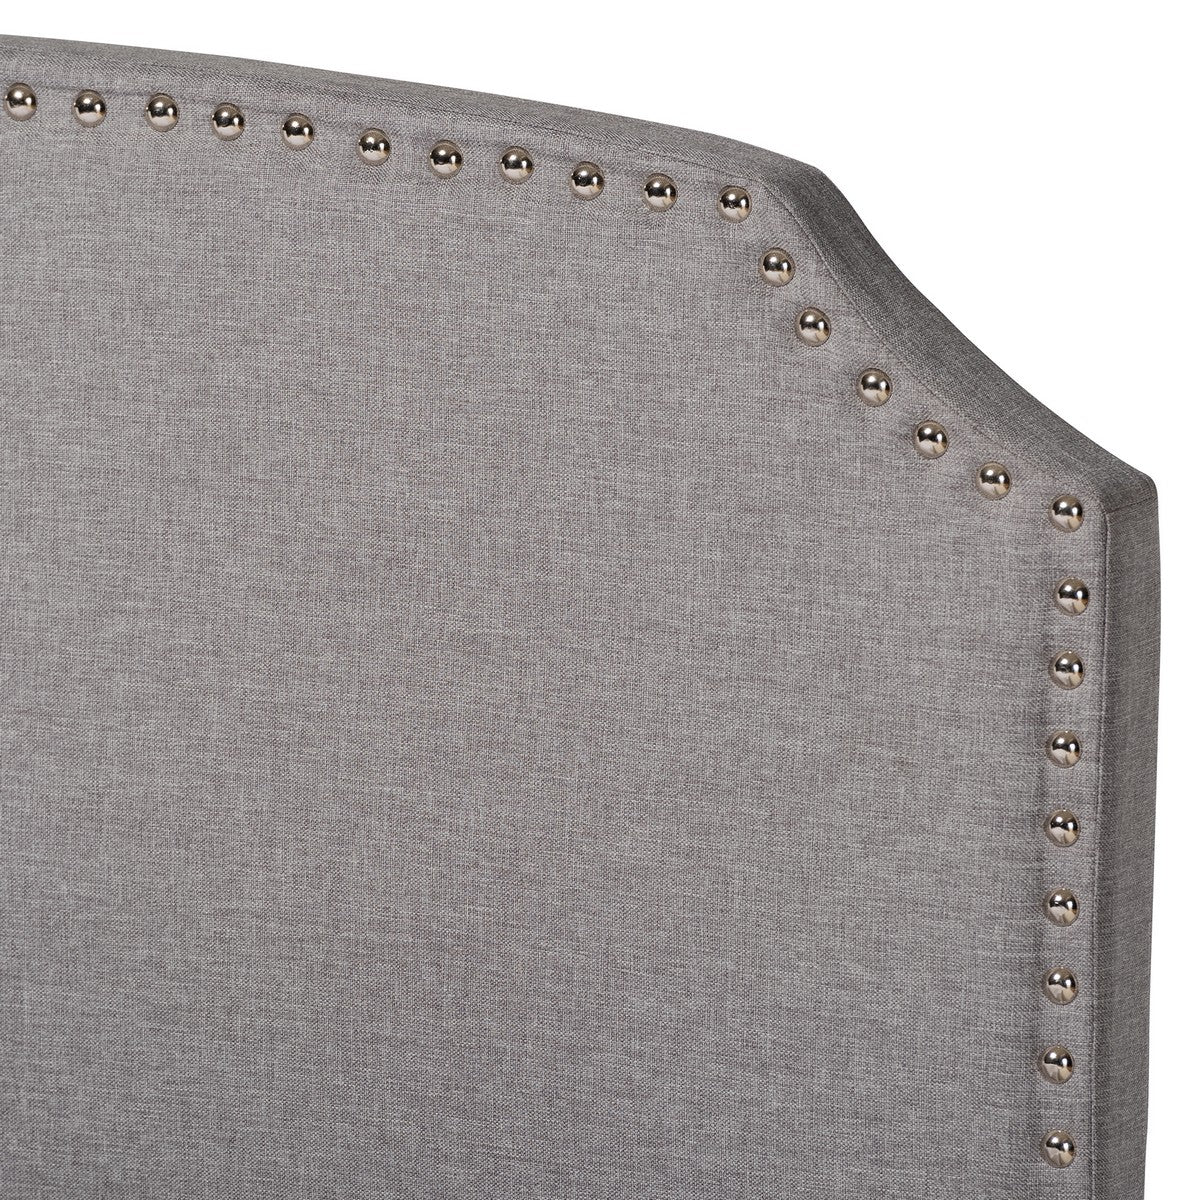 Baxton Studio Larese Light Grey Fabric Upholstered 2-Drawer King Size Platform Storage Bed